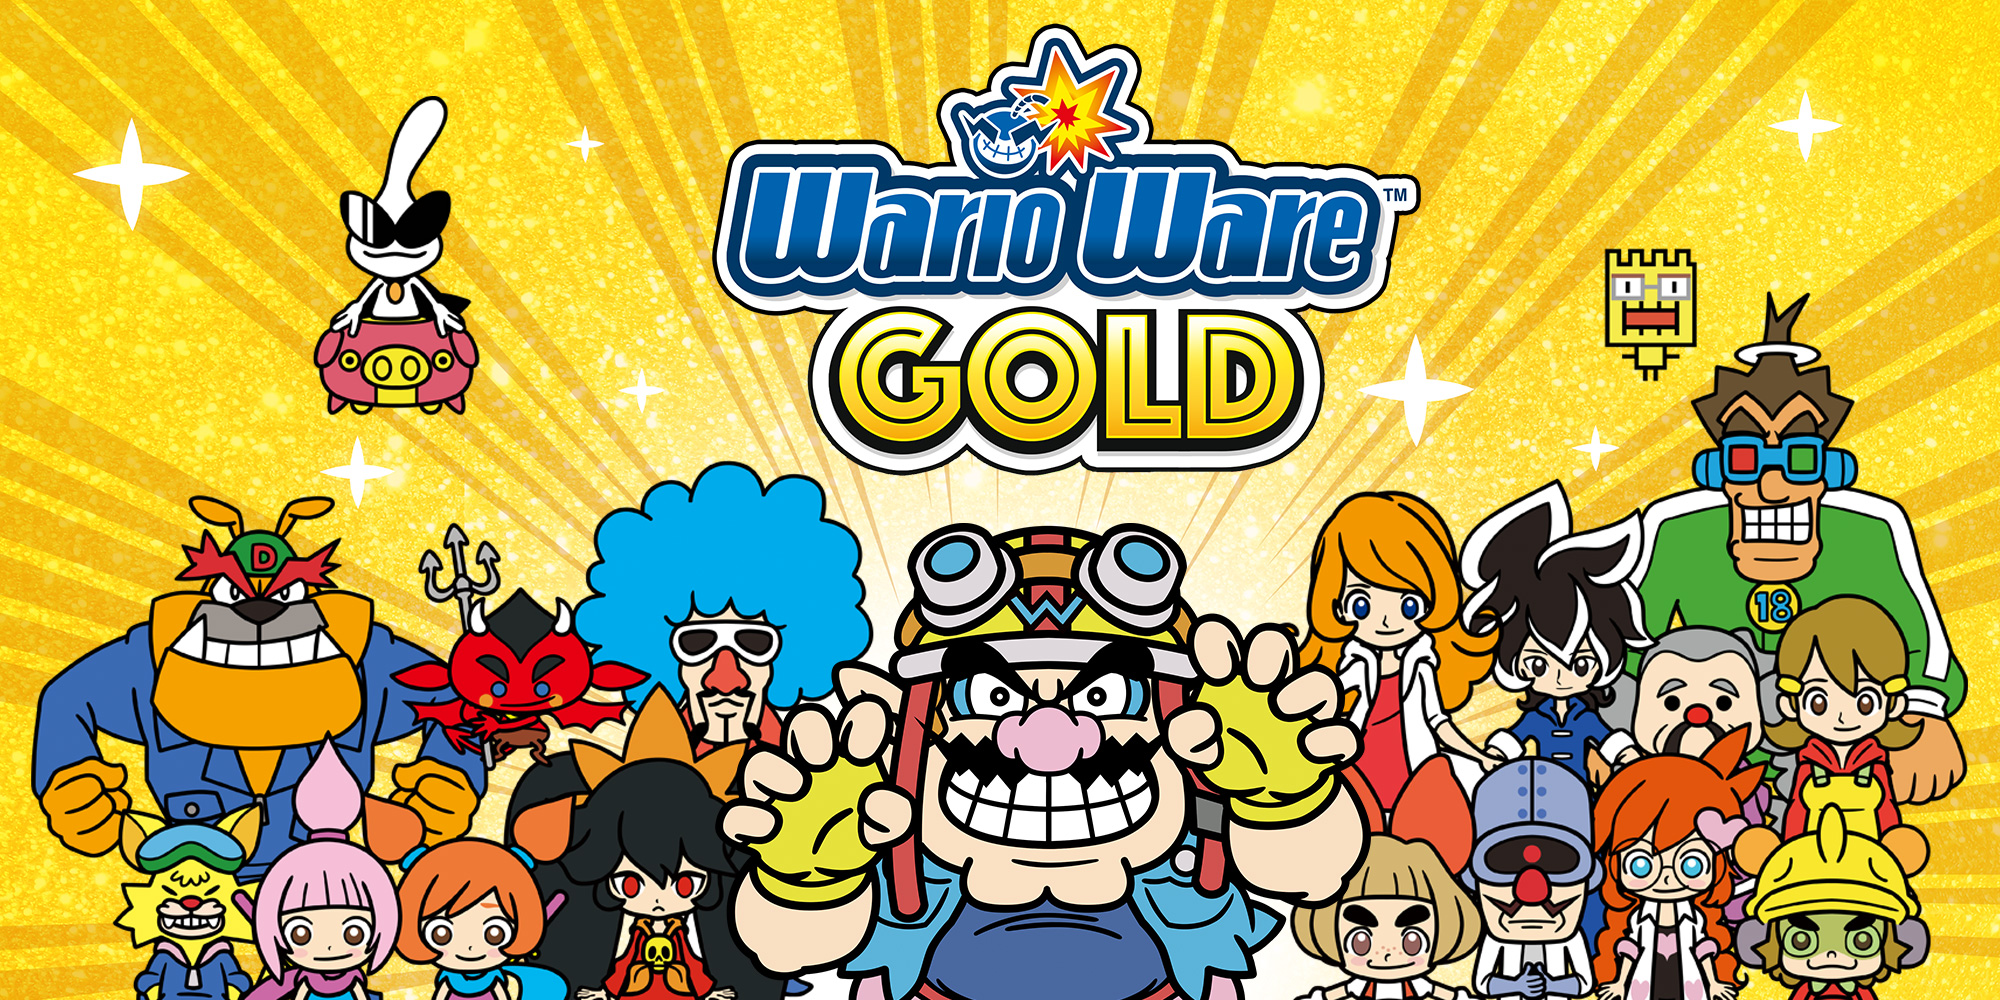 warioware gold cia download